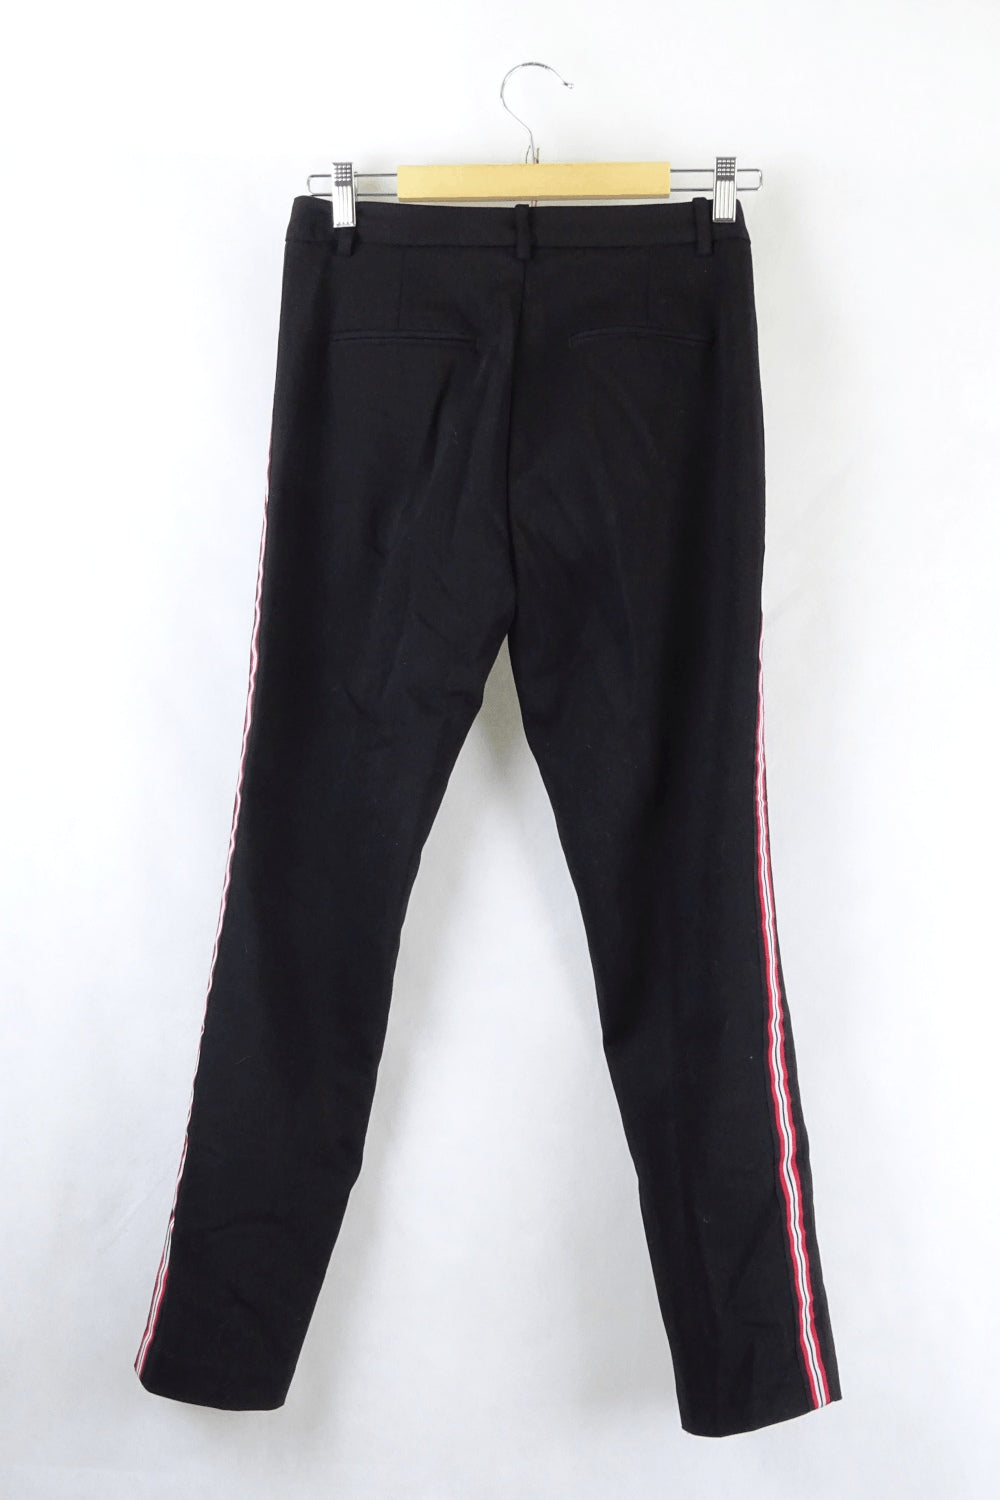 Zara Basic Black  Side Striped Pants S